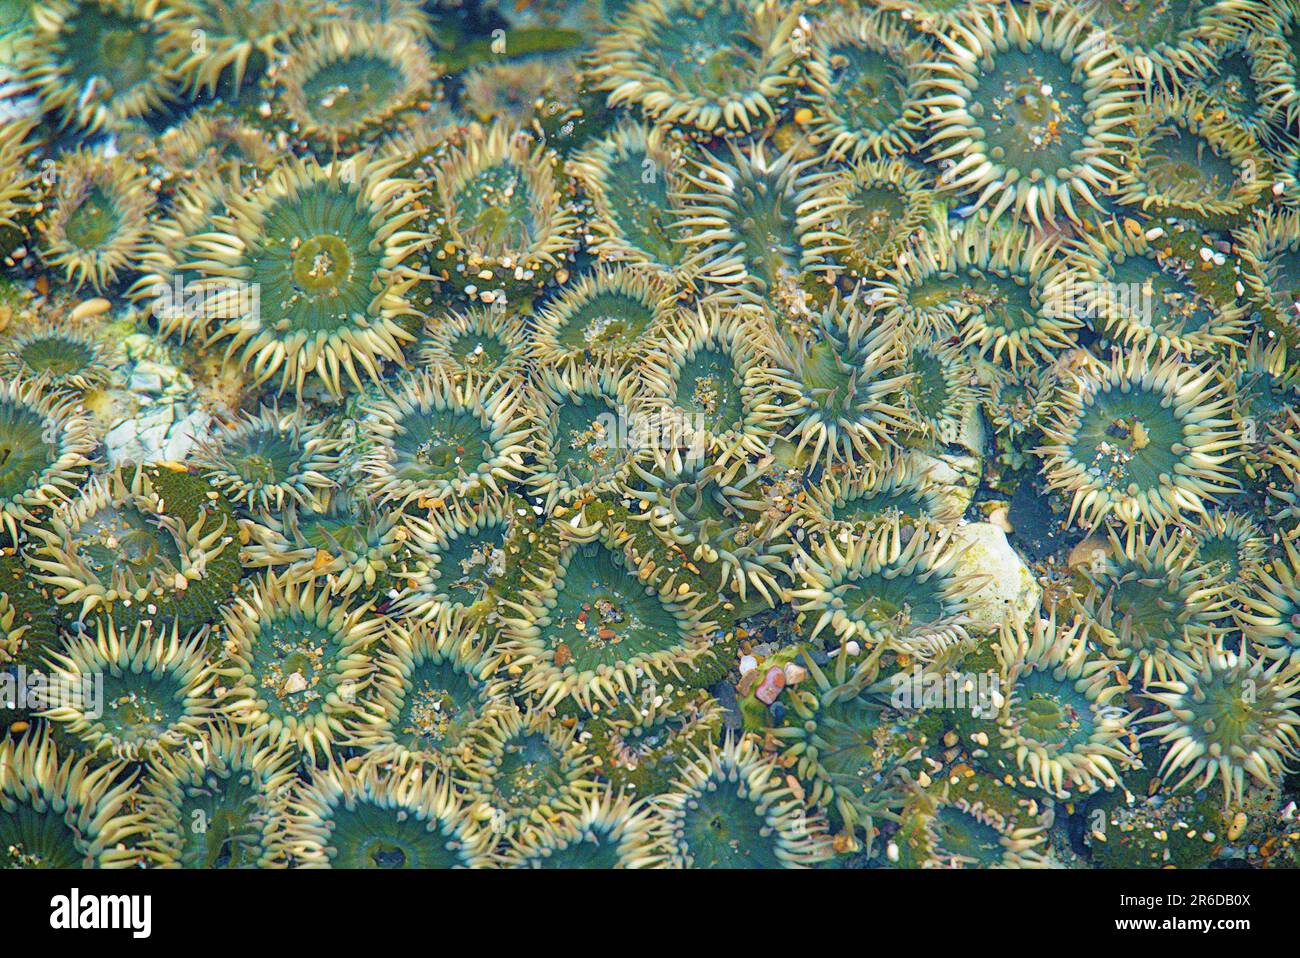 Sunflower like green sea anemones in tide pool. Stock Photo